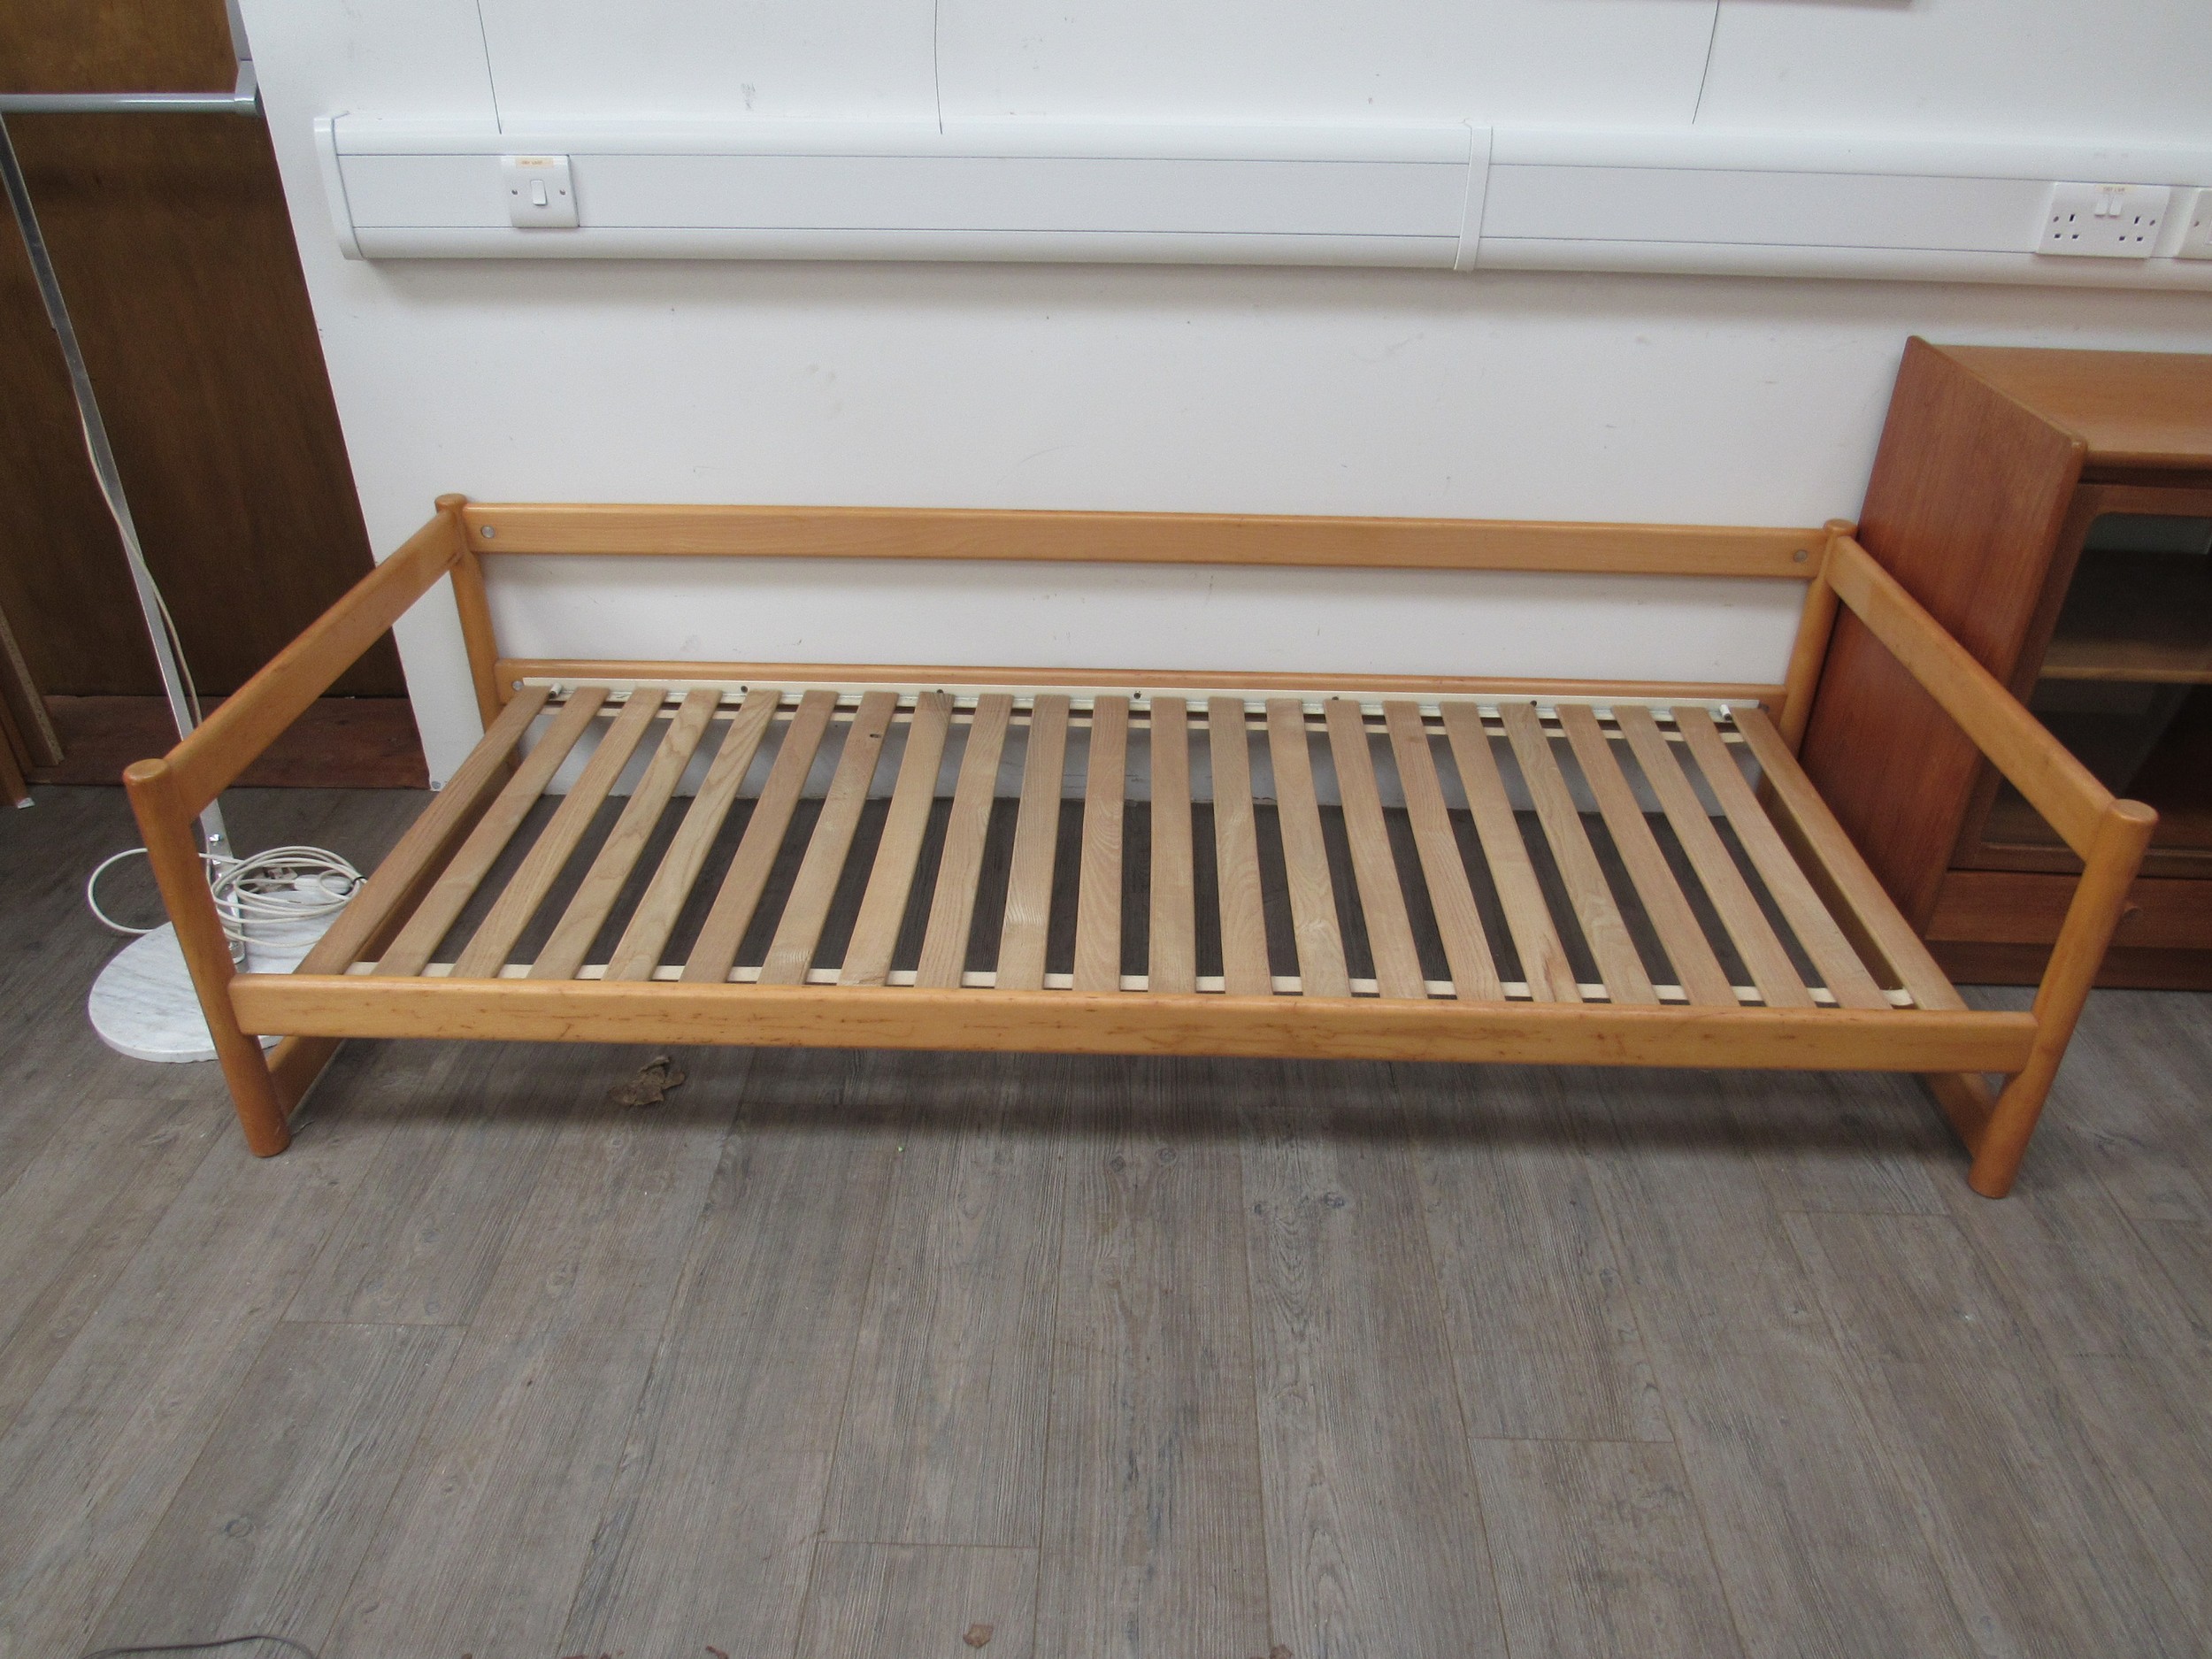 A 1970's Habitat day bed frame, 198cm x 83cm x 50cm high